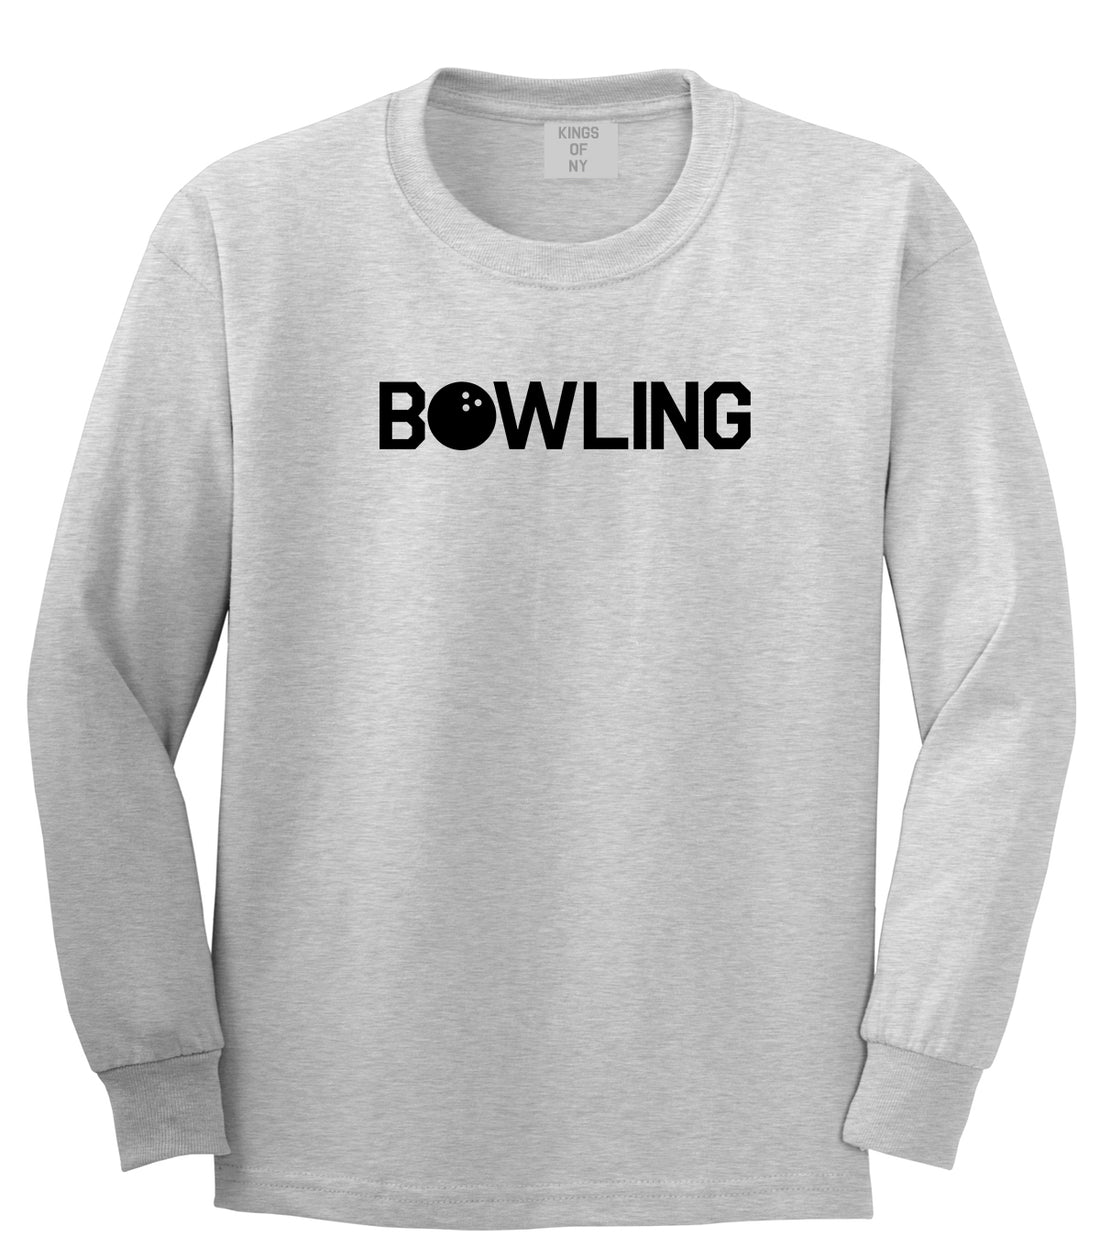 Bowling Grey Long Sleeve T-Shirt by Kings Of NY